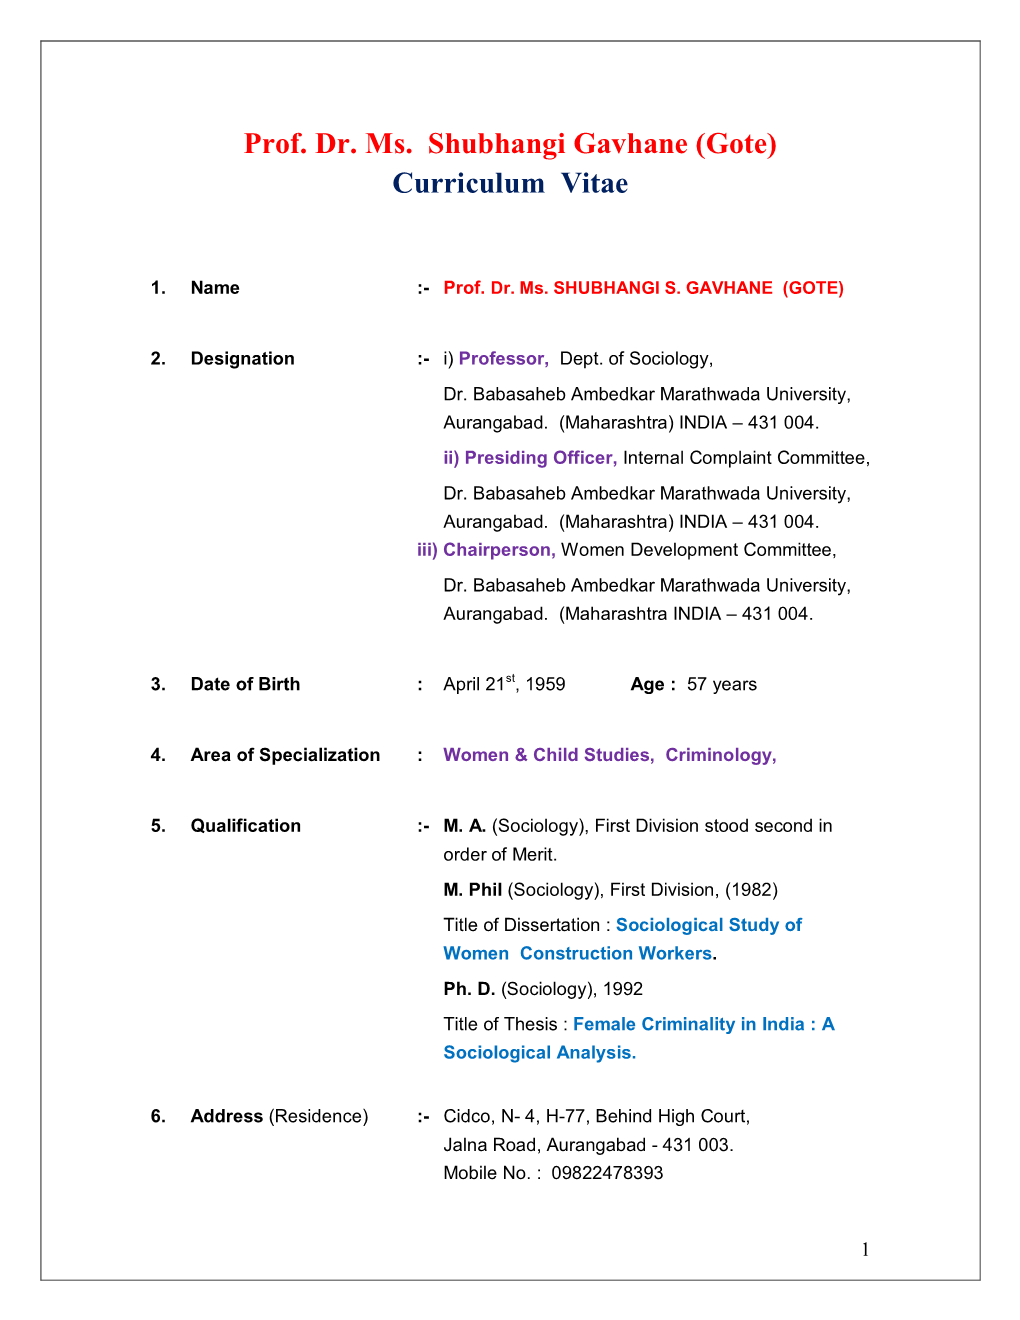 Prof. Dr. Ms. Shubhangi Gavhane (Gote) Curriculum Vitae